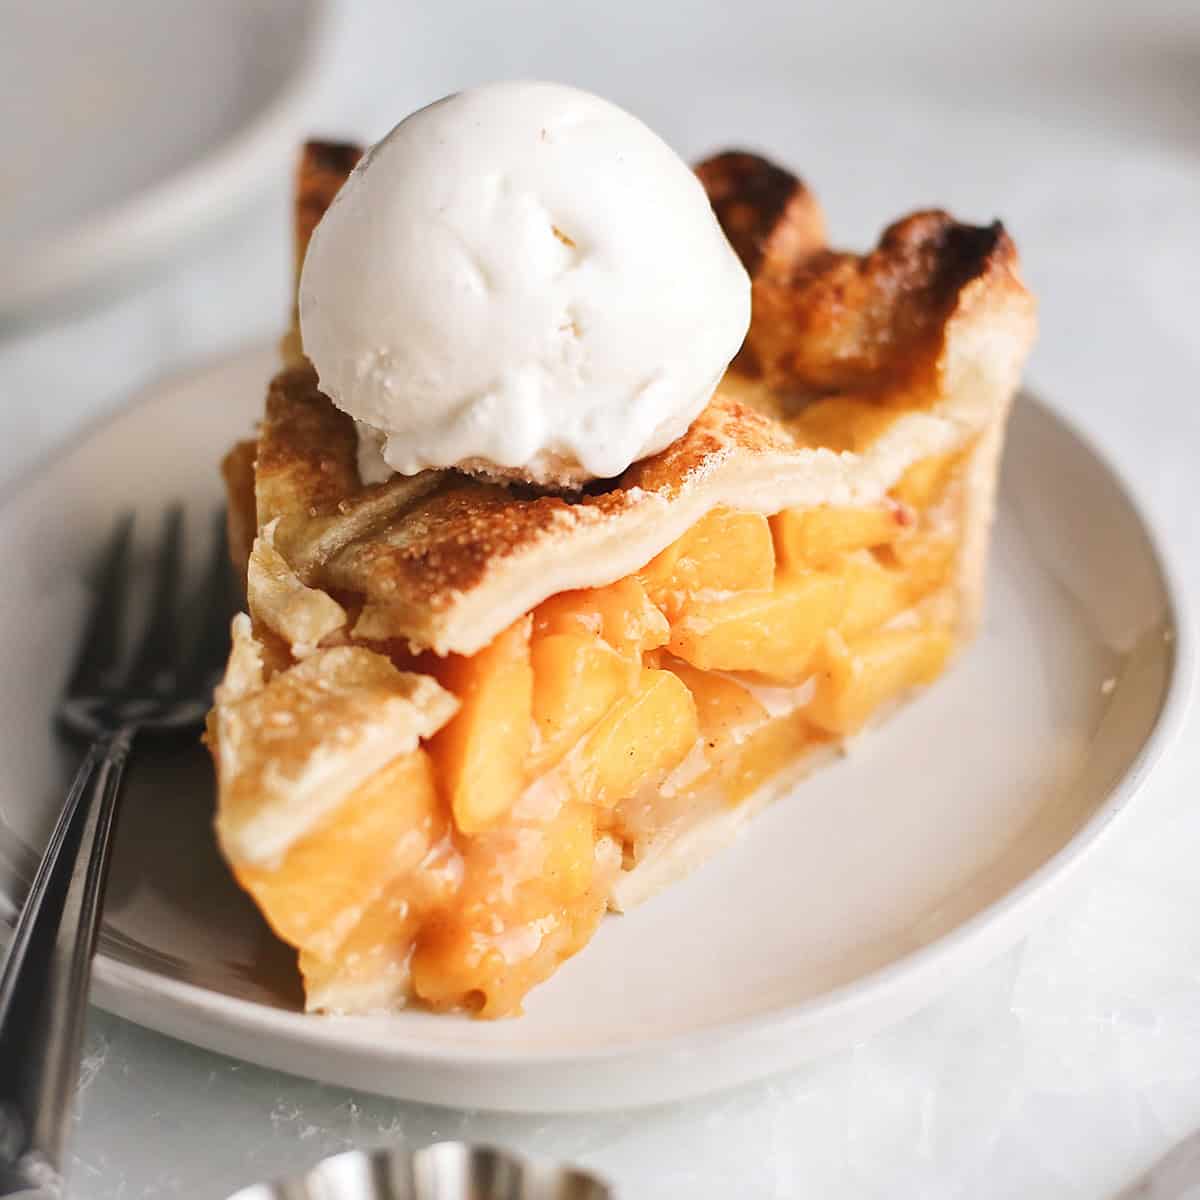 a slice of peach pie with vanilla ice cream on top